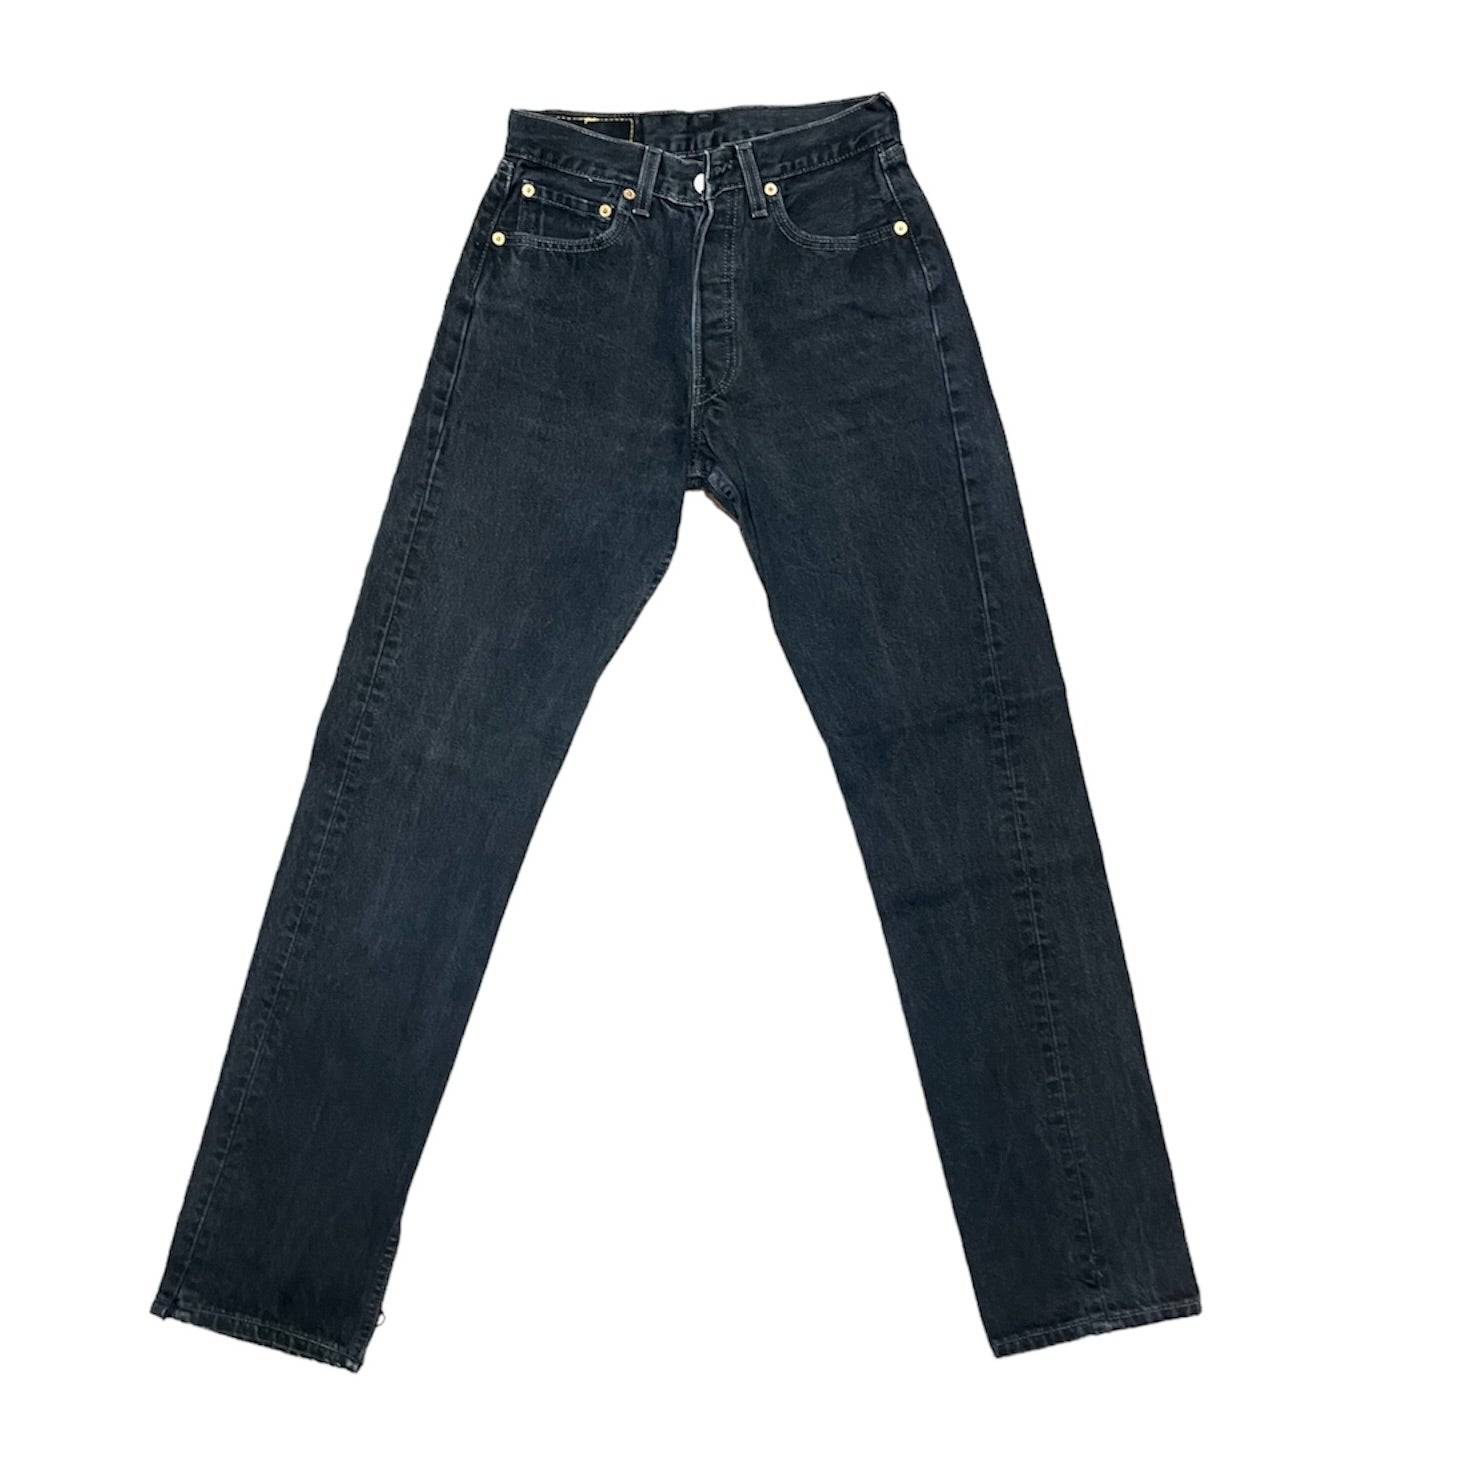 Vintage Levis 501 Black/Grey Jeans